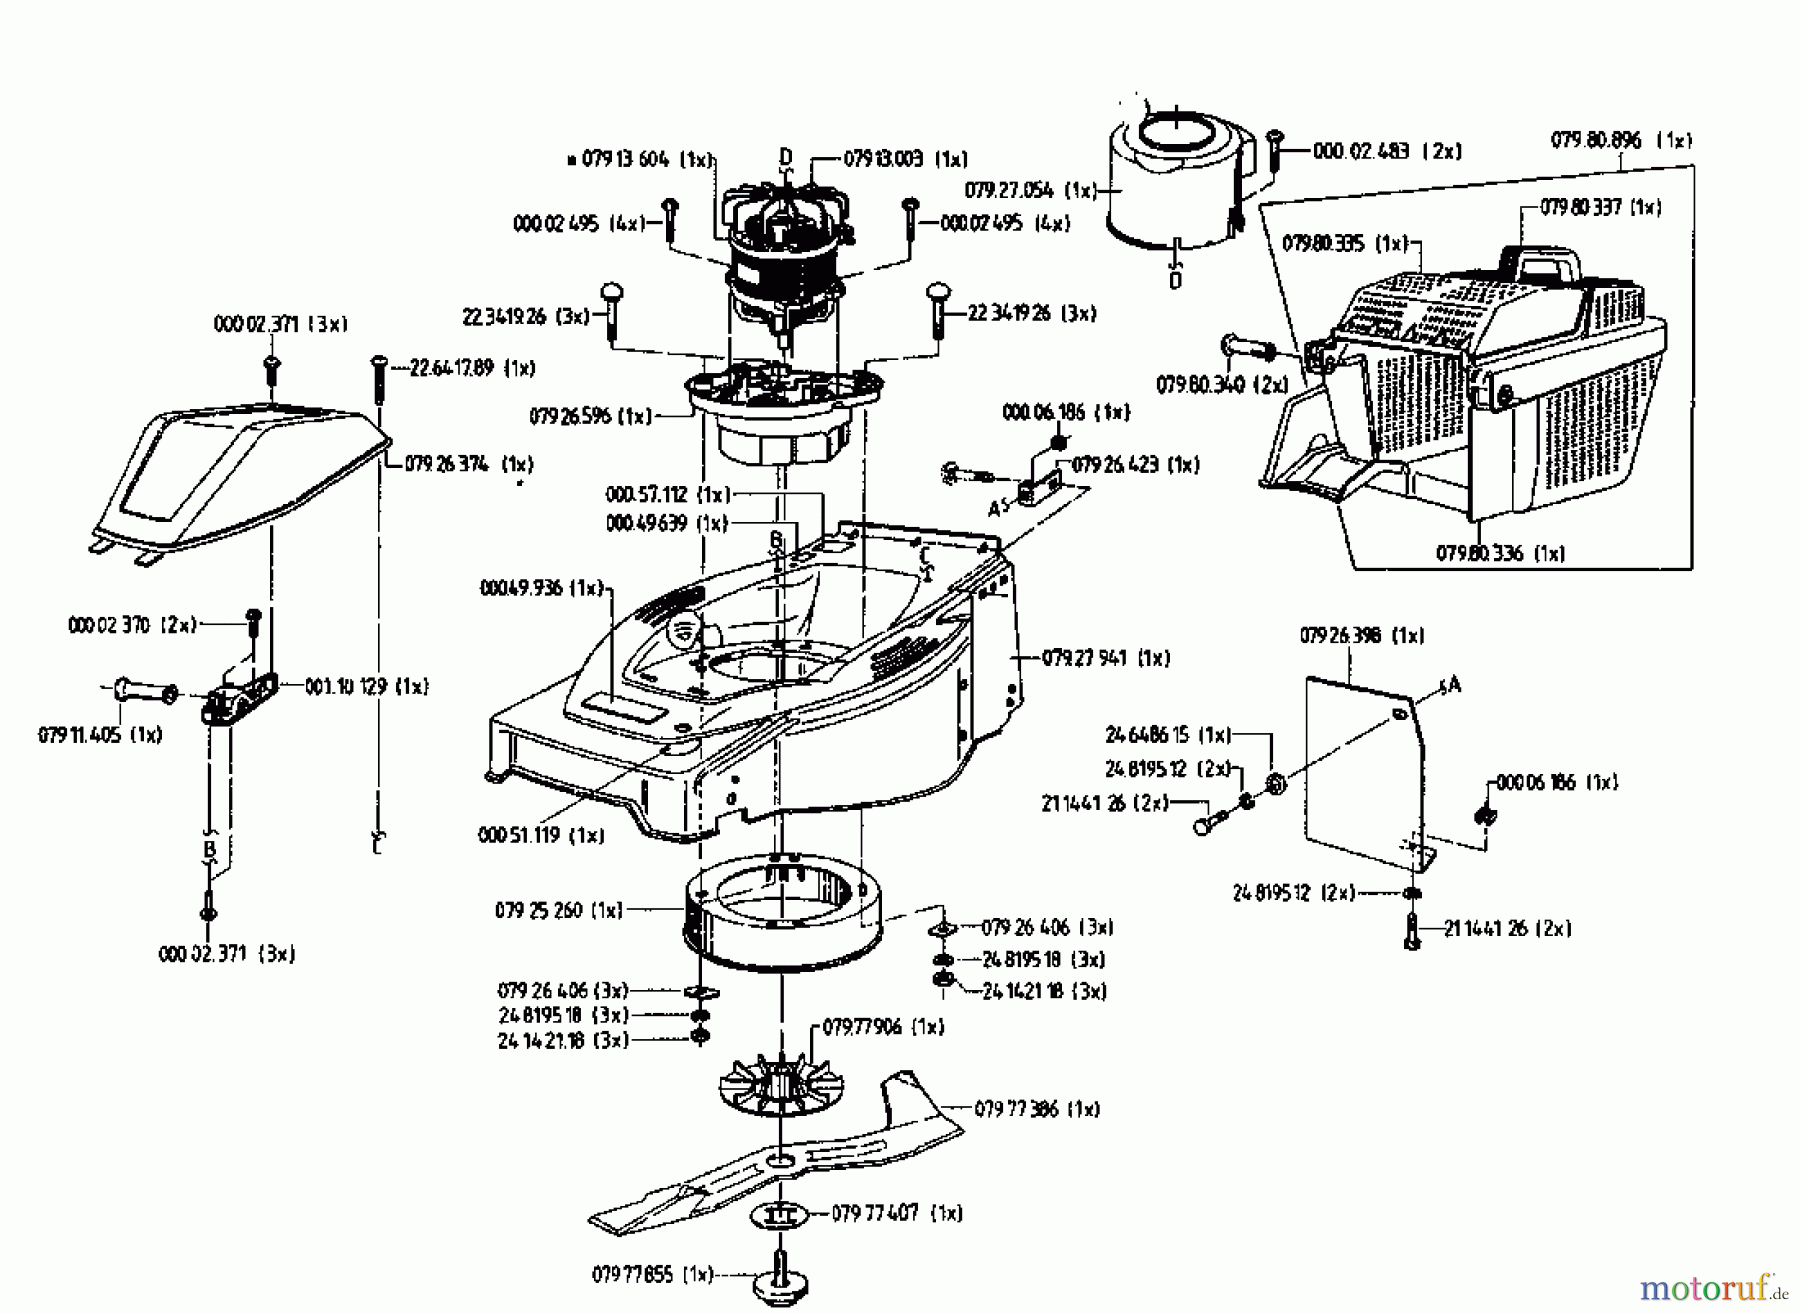  Gutbrod Electric mower HE 48 L 02817.05  (1996) Basic machine